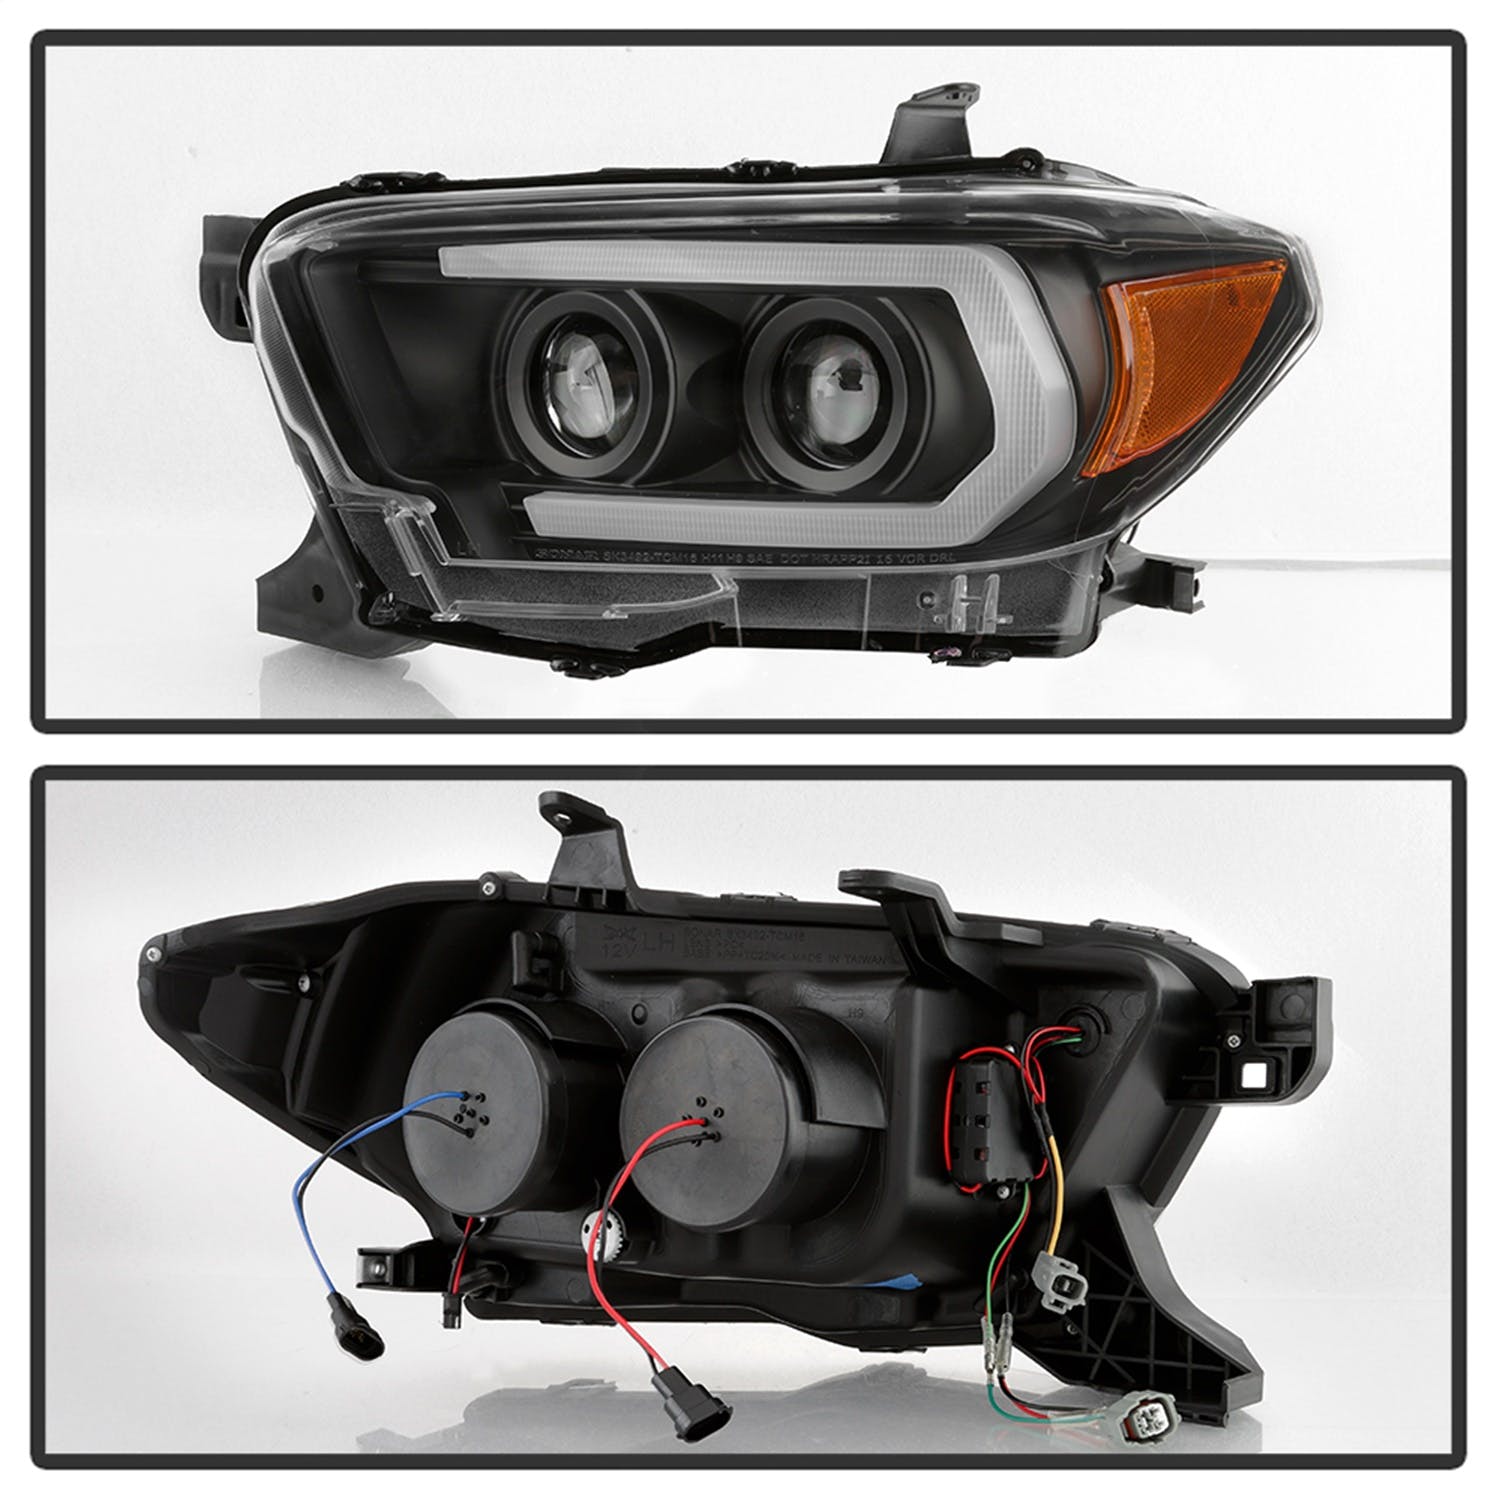 Spyder Auto 5085818 Projector Headlights